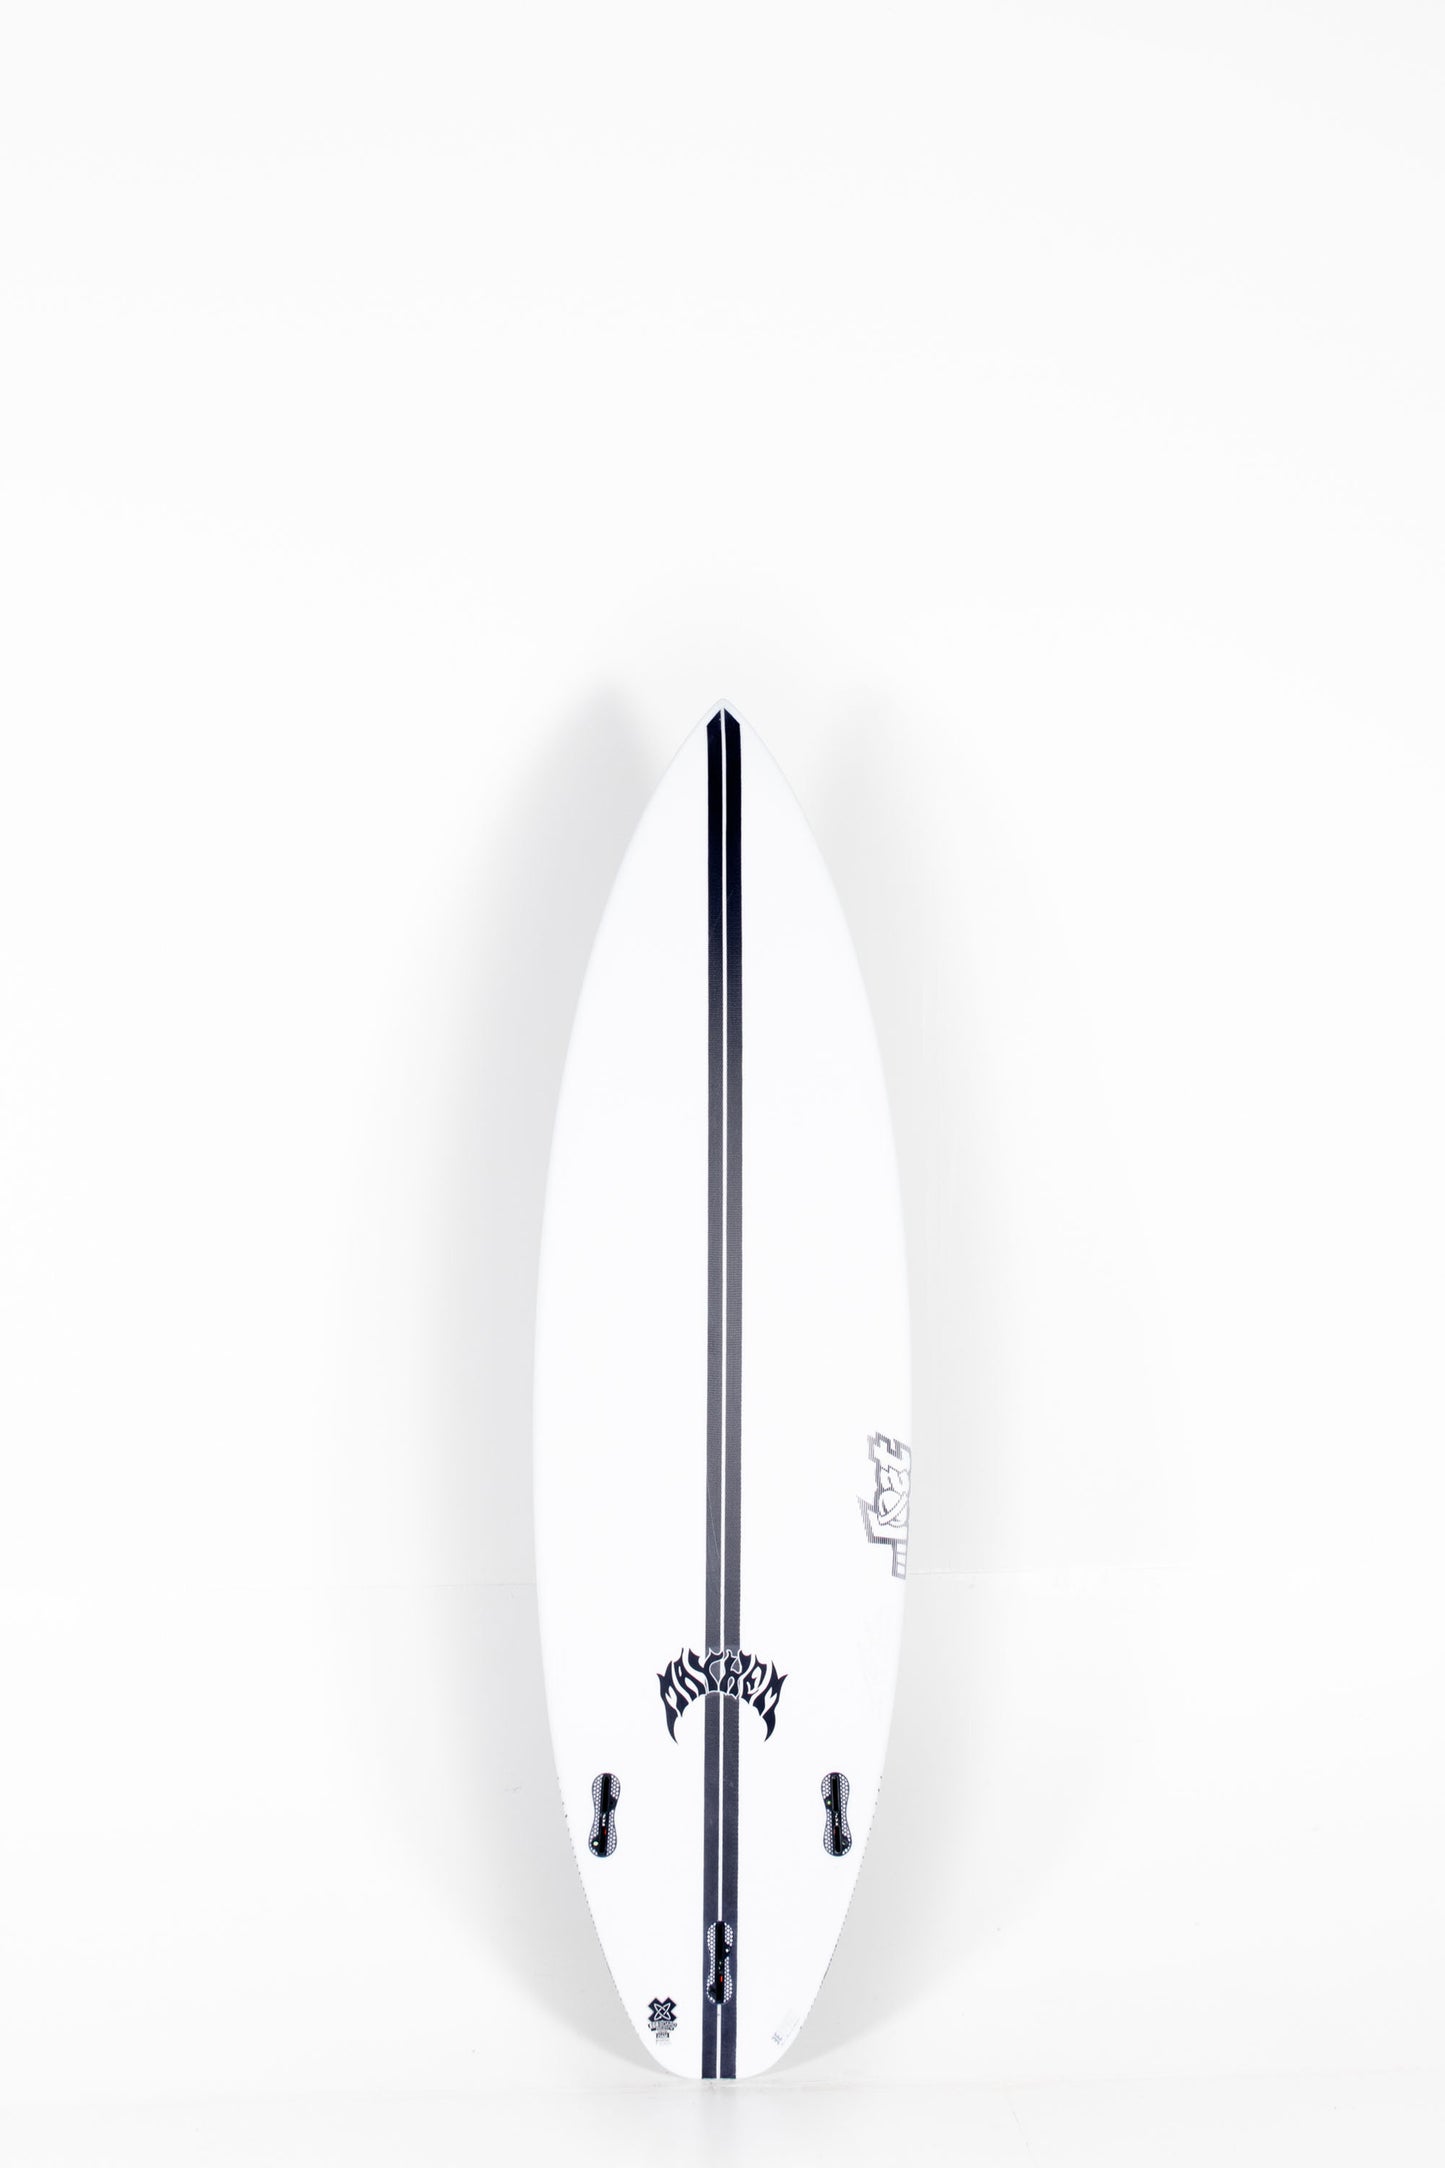 Pukas Surf Shop - Lost Surfboard - DRIVER 2.0 by Matt Biolos - Light Speed - 6’0” x 19,50 x 2,50 - 30,75L - MH12362